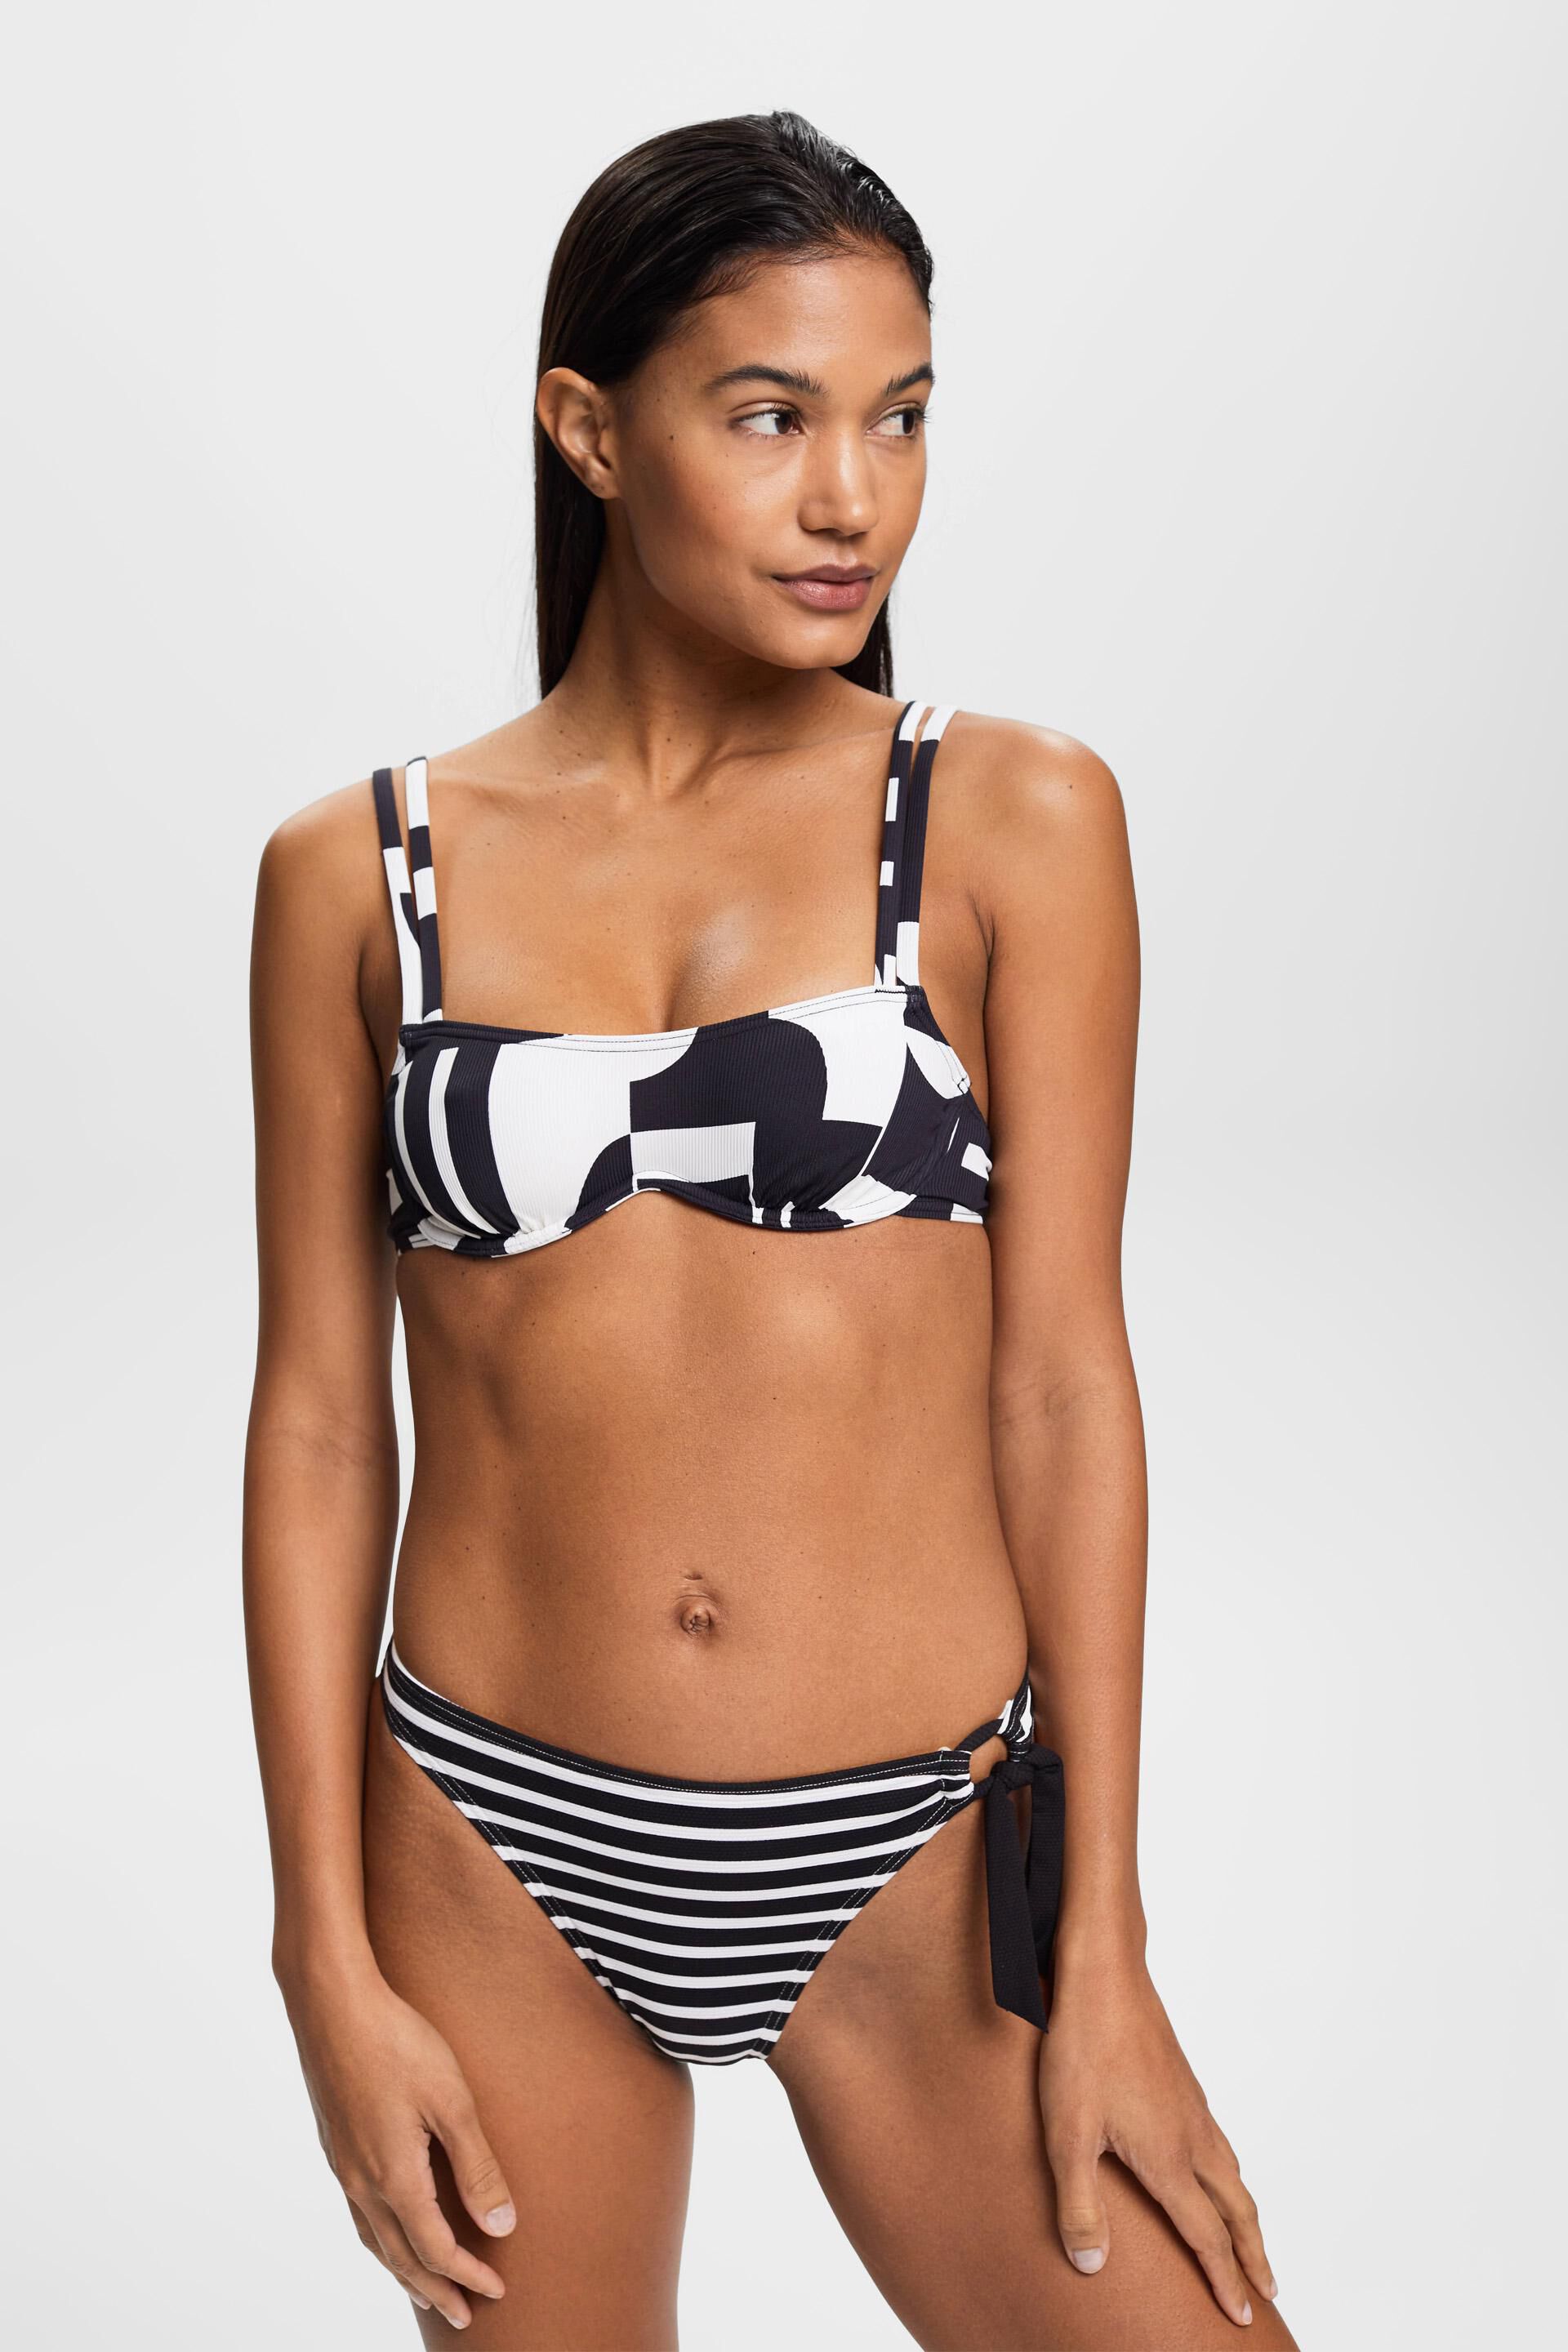 Esprit top retro print bikini with Underwired